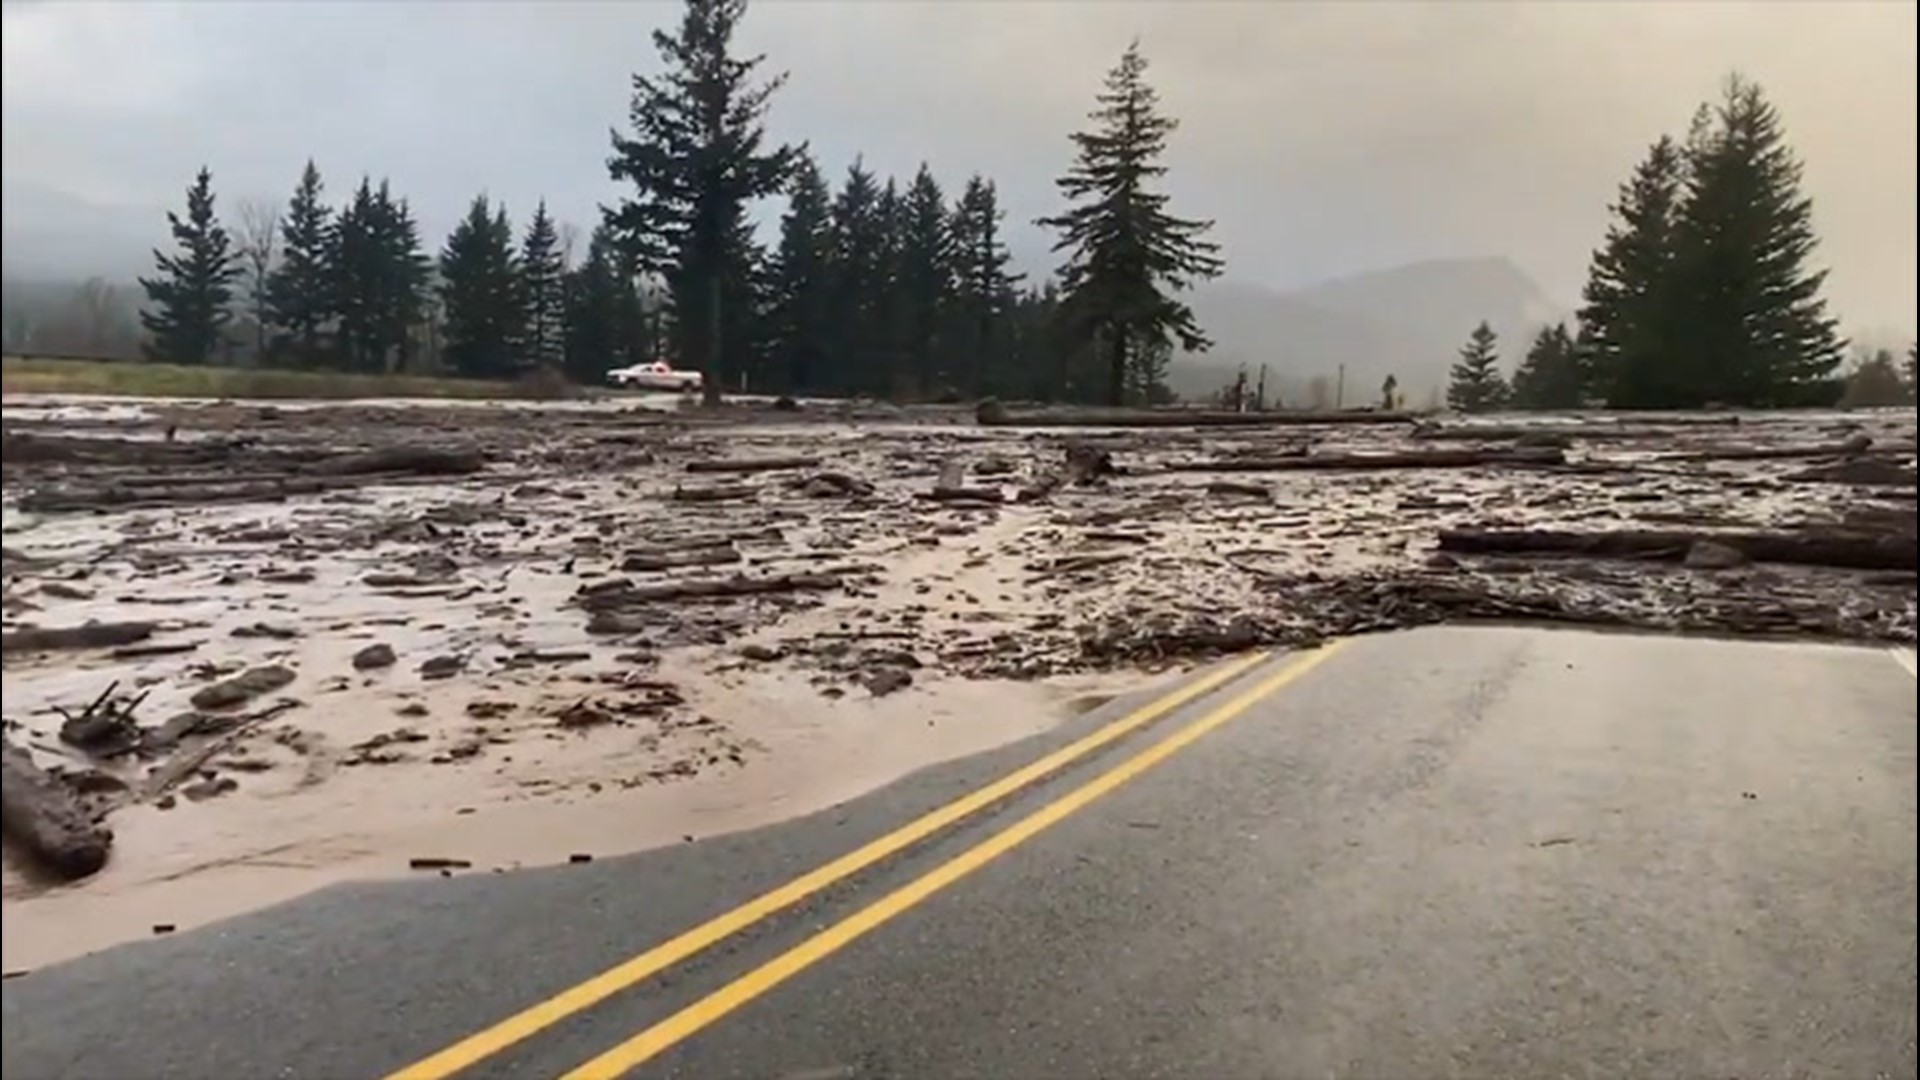 A powerful landslide swept down the hillside in Multnomah County, Oregon, scattering debris over the roads on Jan. 13.